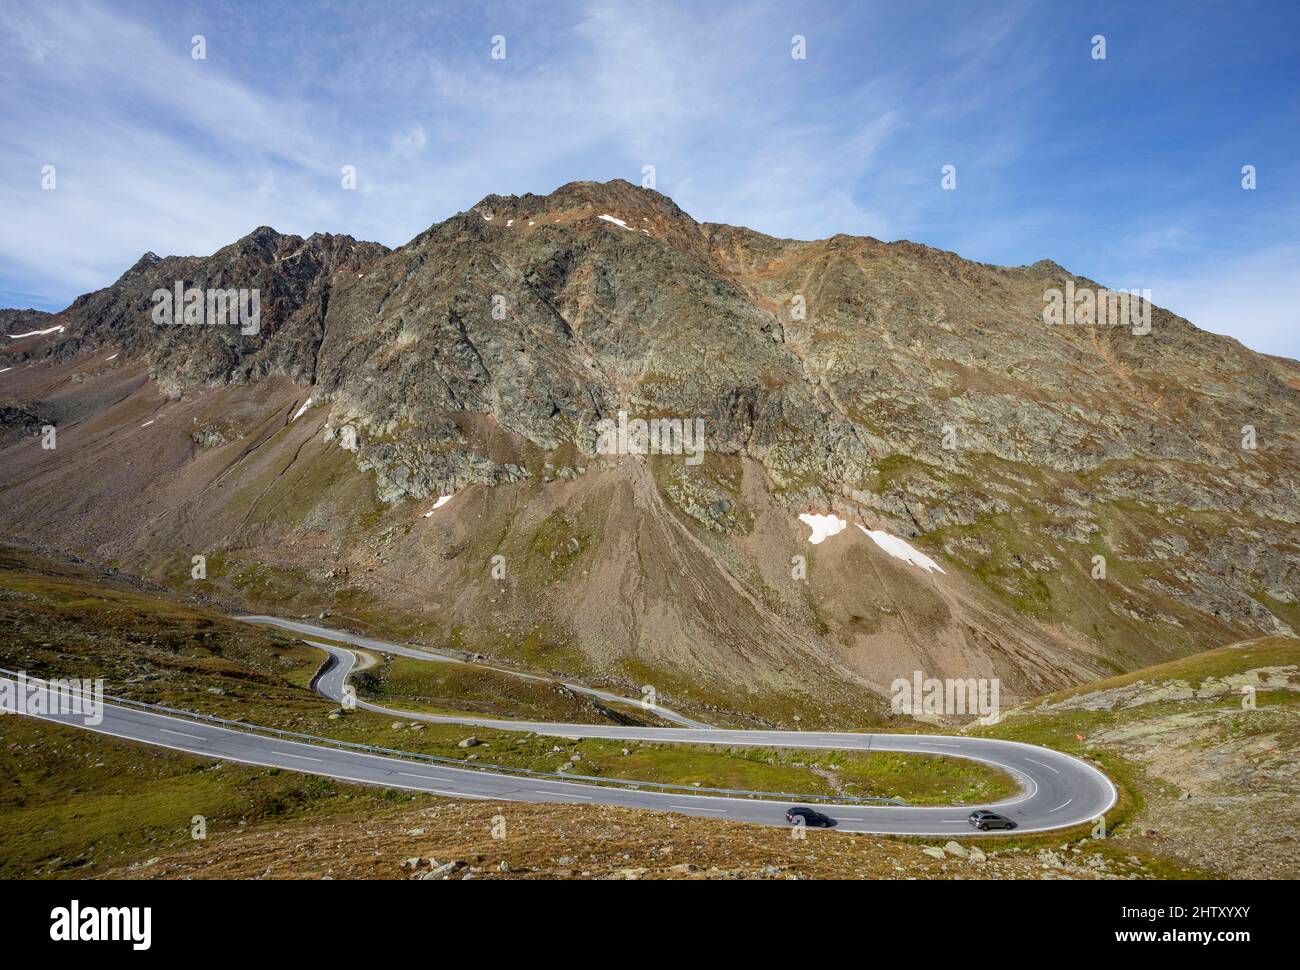 Timmelsjoch High Alpine Road, Passo del Rombo, Pass Road entre Tyrol et Tyrol du Sud, Alpes d'Oetztal, Oetztal, Tyrol, Autriche Banque D'Images